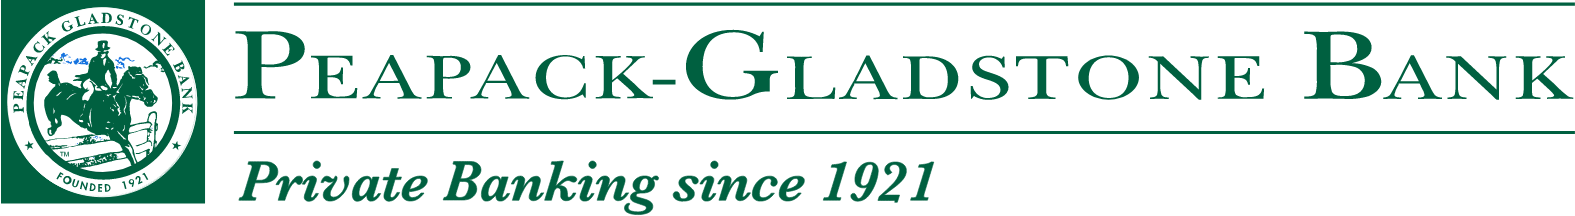 Peapack-Gladstone Financial logo large (transparent PNG)